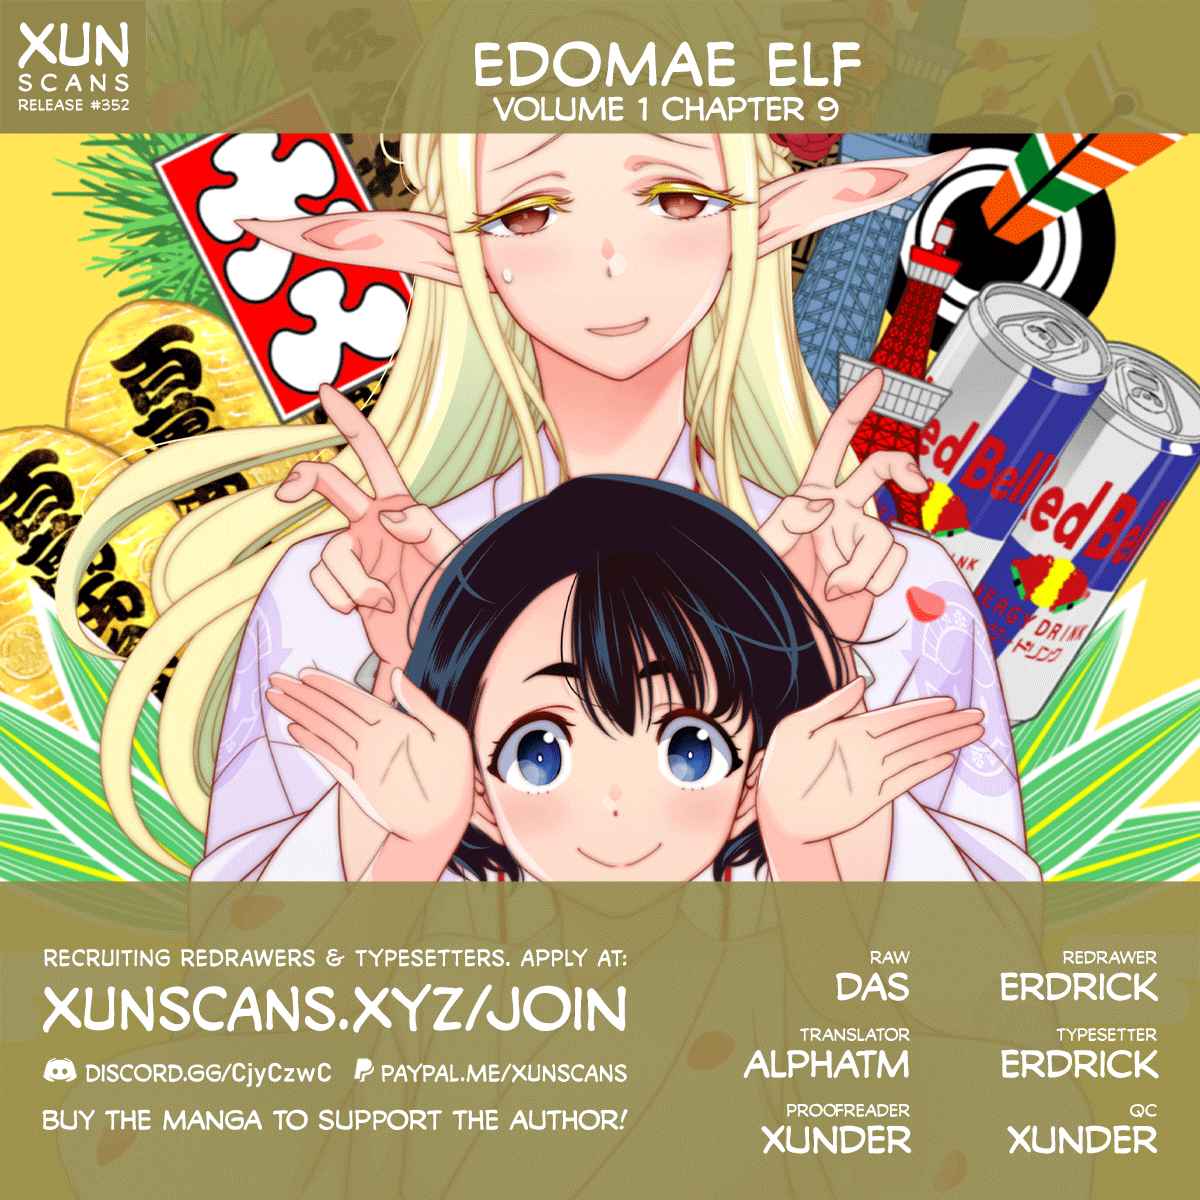 Edomae Elf Vol. 1 Ch. 9 The Edomae Elf and the Tokyoite Girl